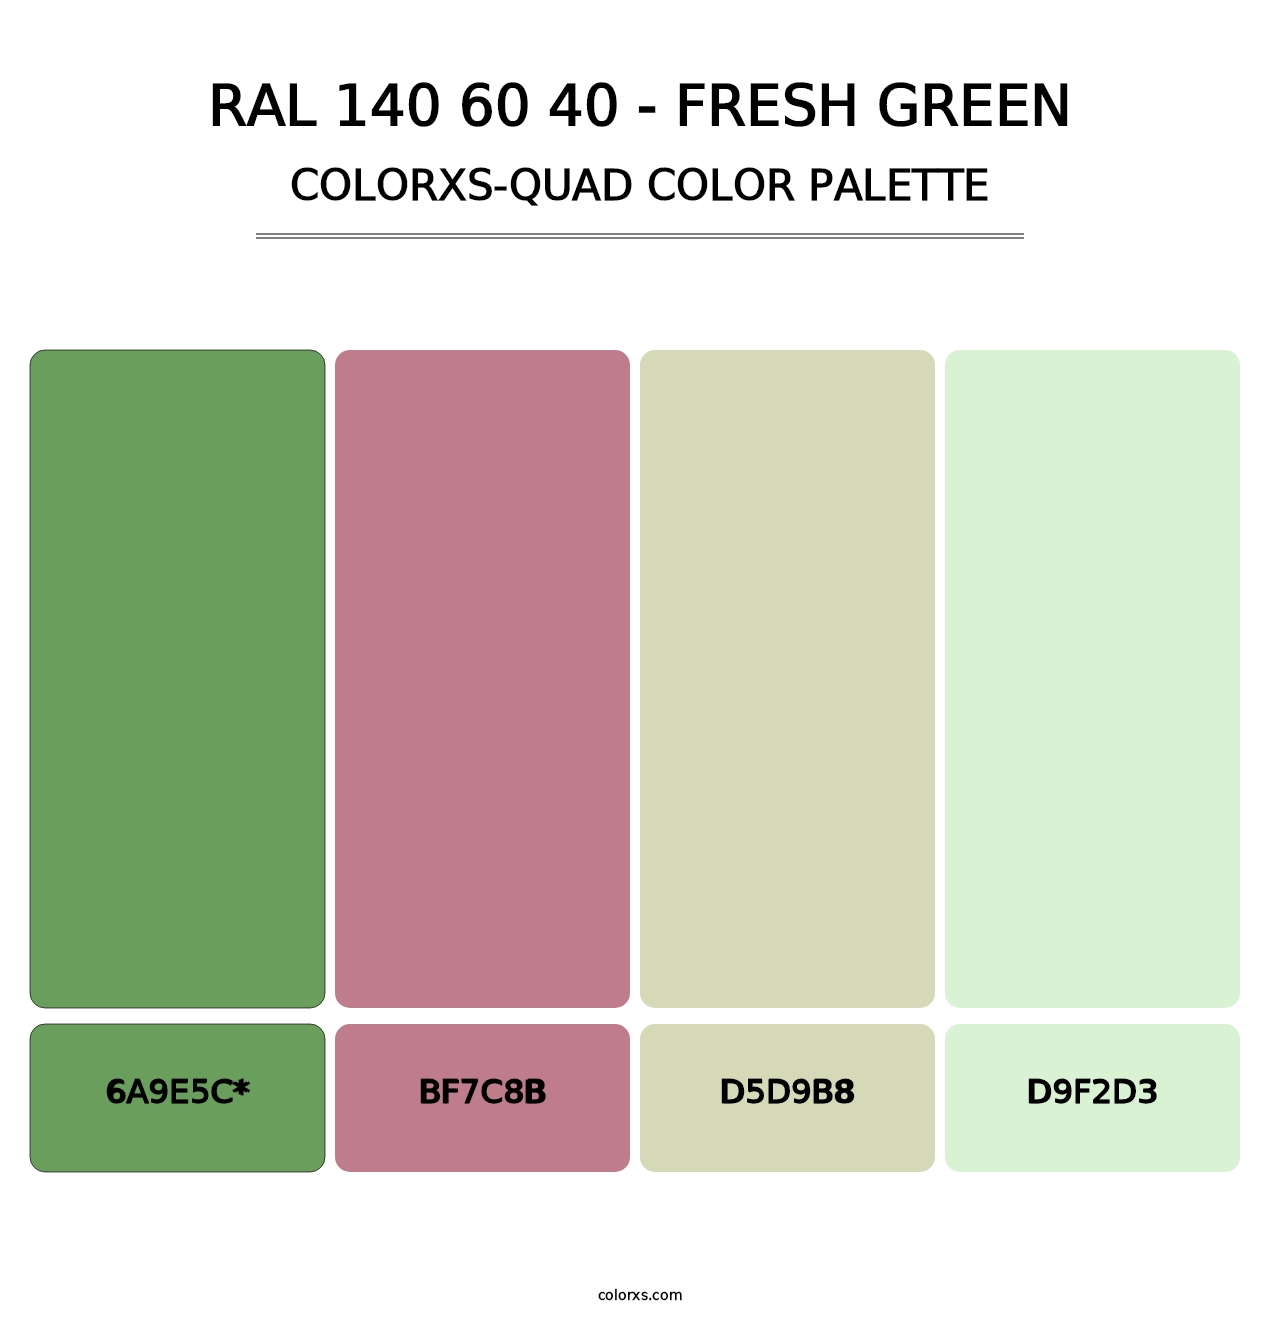 RAL 140 60 40 - Fresh Green - Colorxs Quad Palette